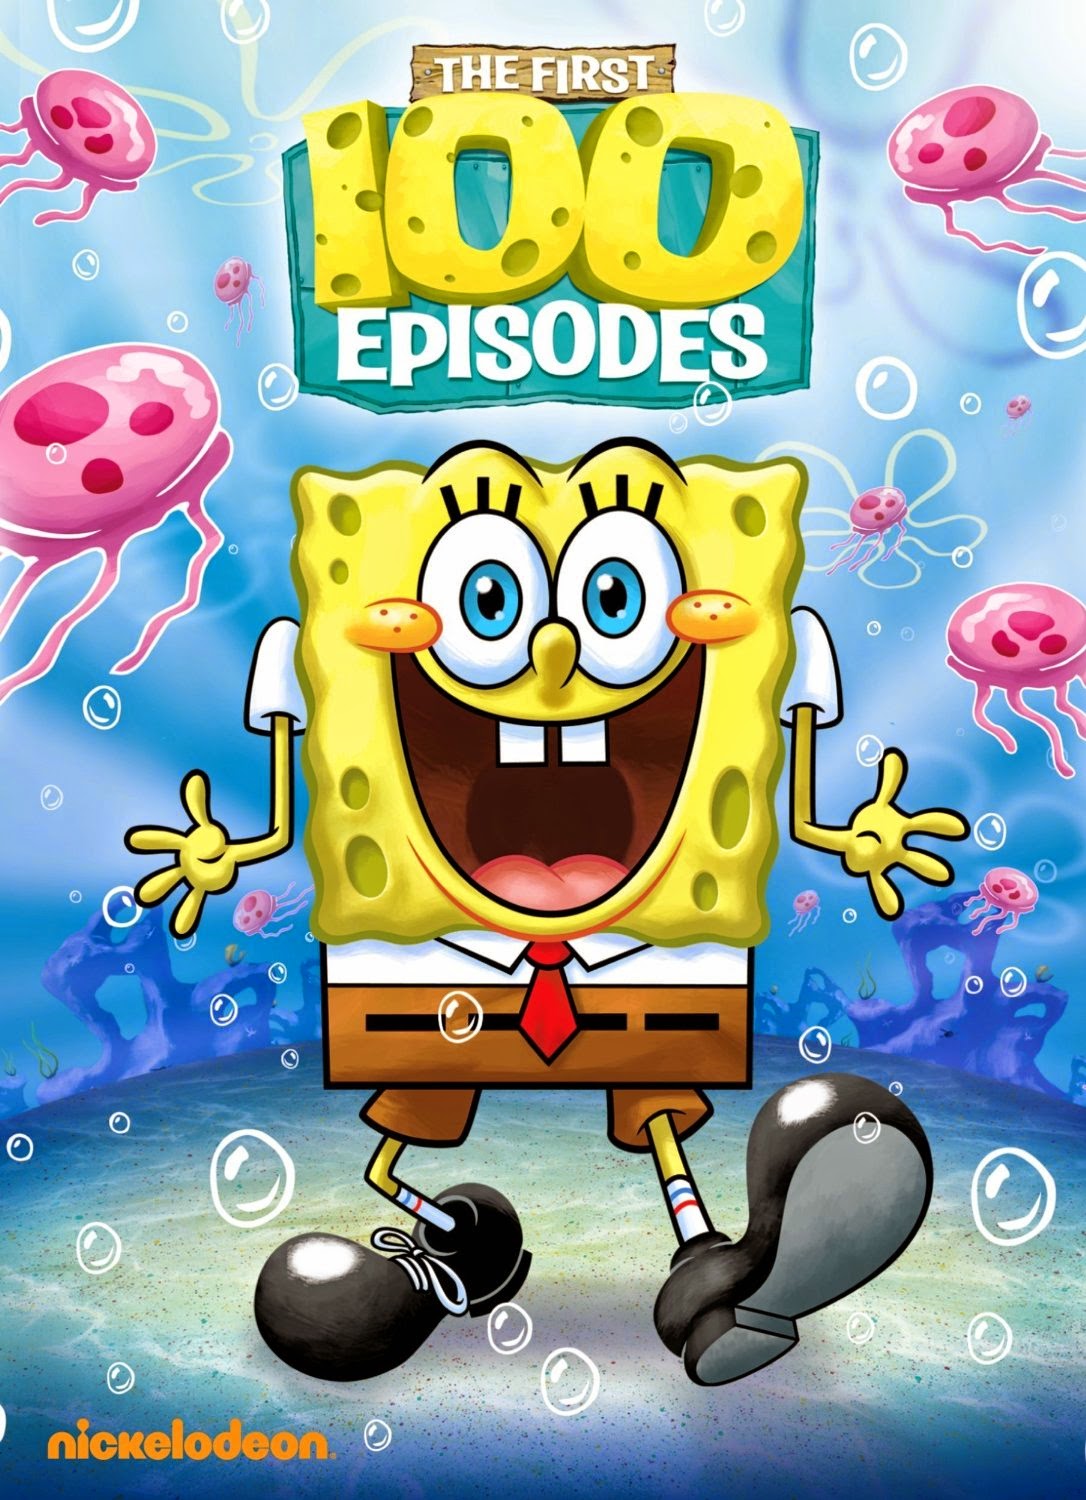 The last episode of spongebob squarepants